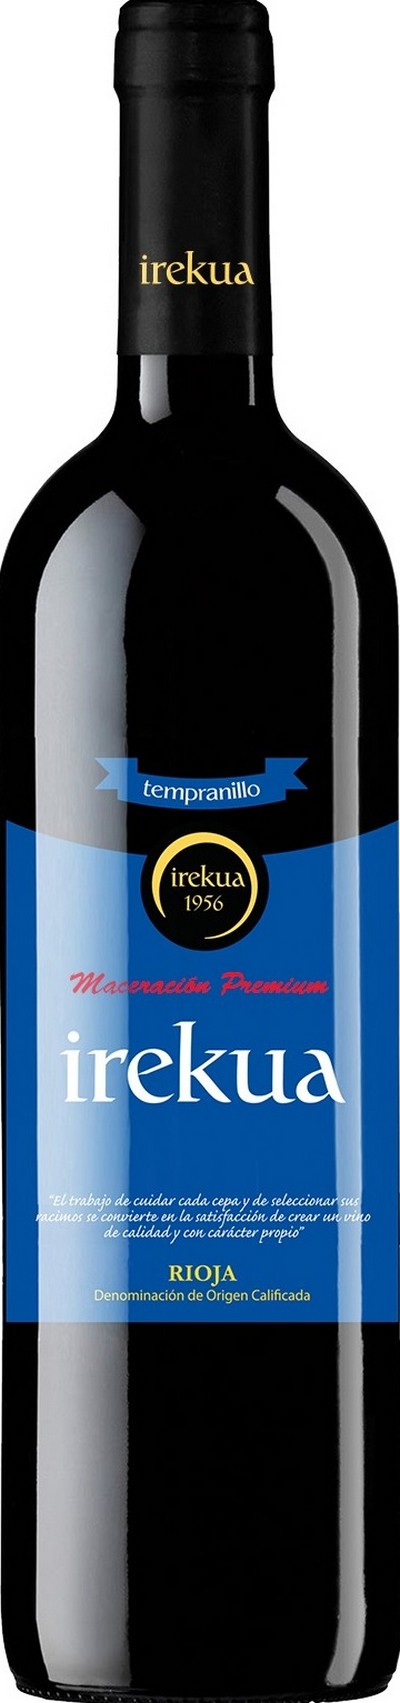 irekua-tempranillo-maceracion-premium-2015